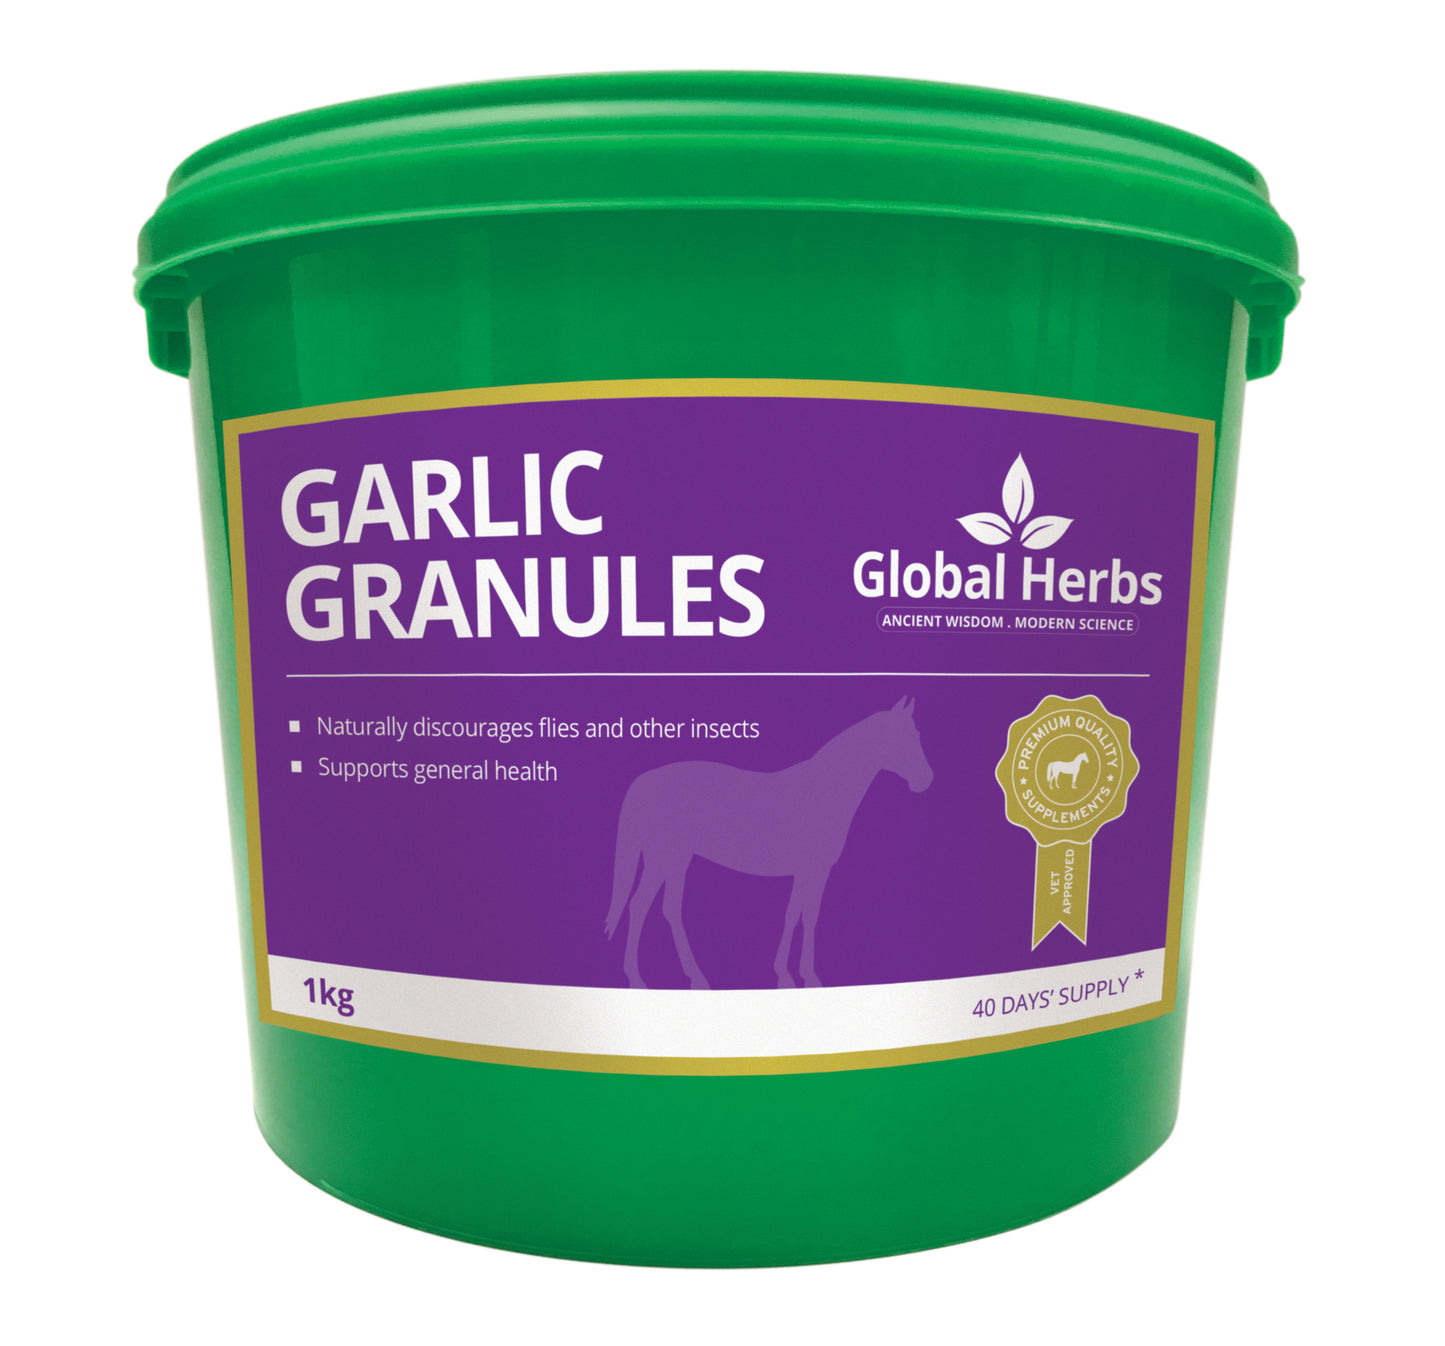 Garlic Granules 1kg - Global Herbs